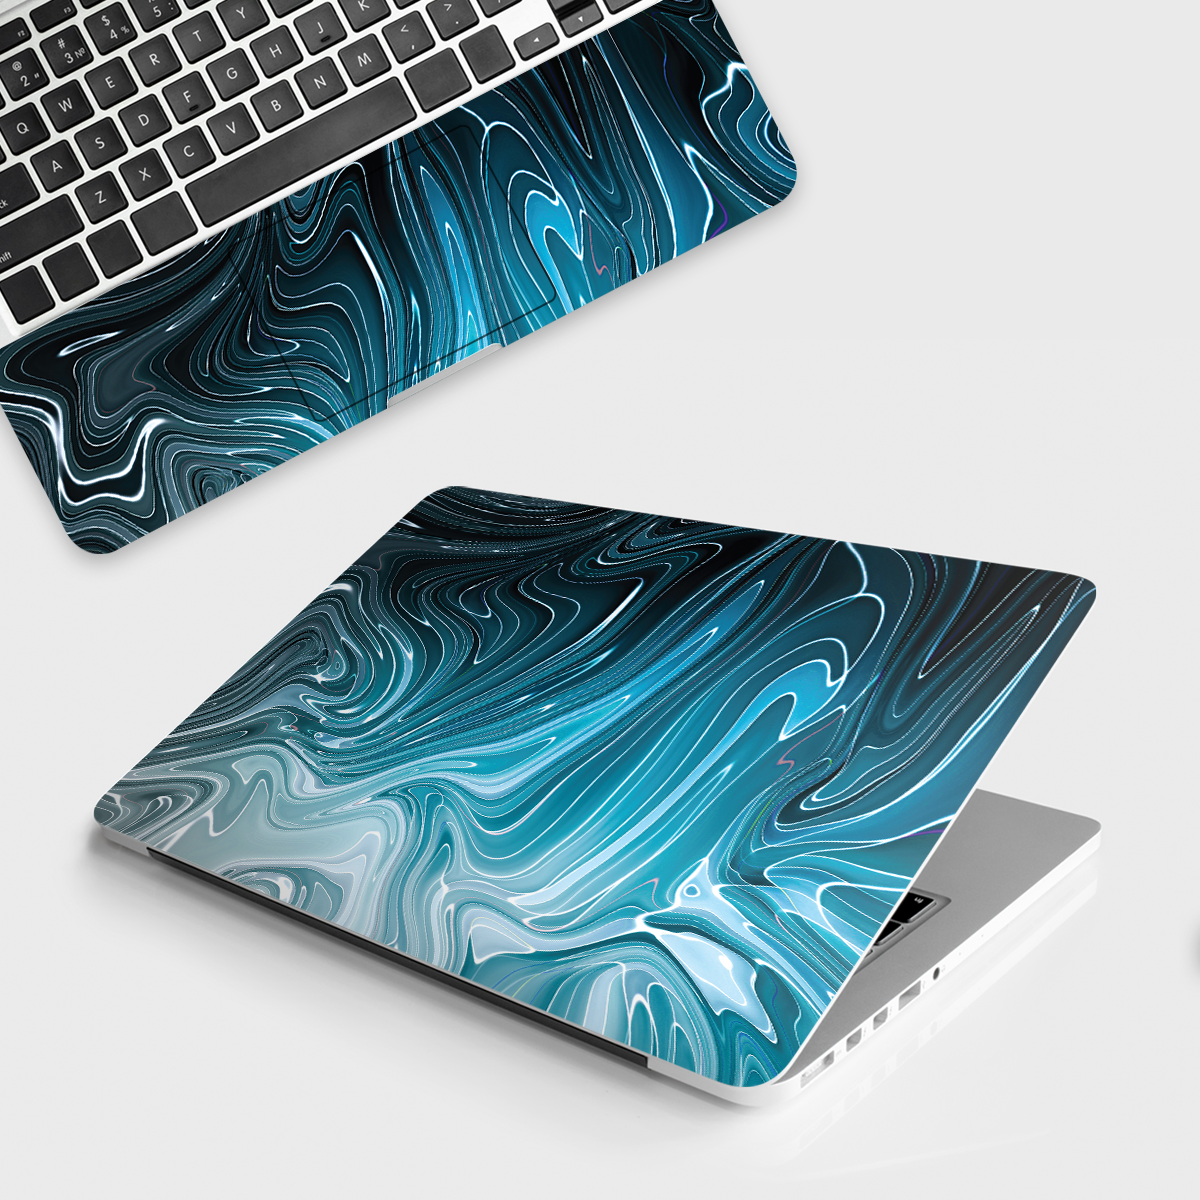 Fomo Store Laptop Skins Marble Cerulean Liquid Texture